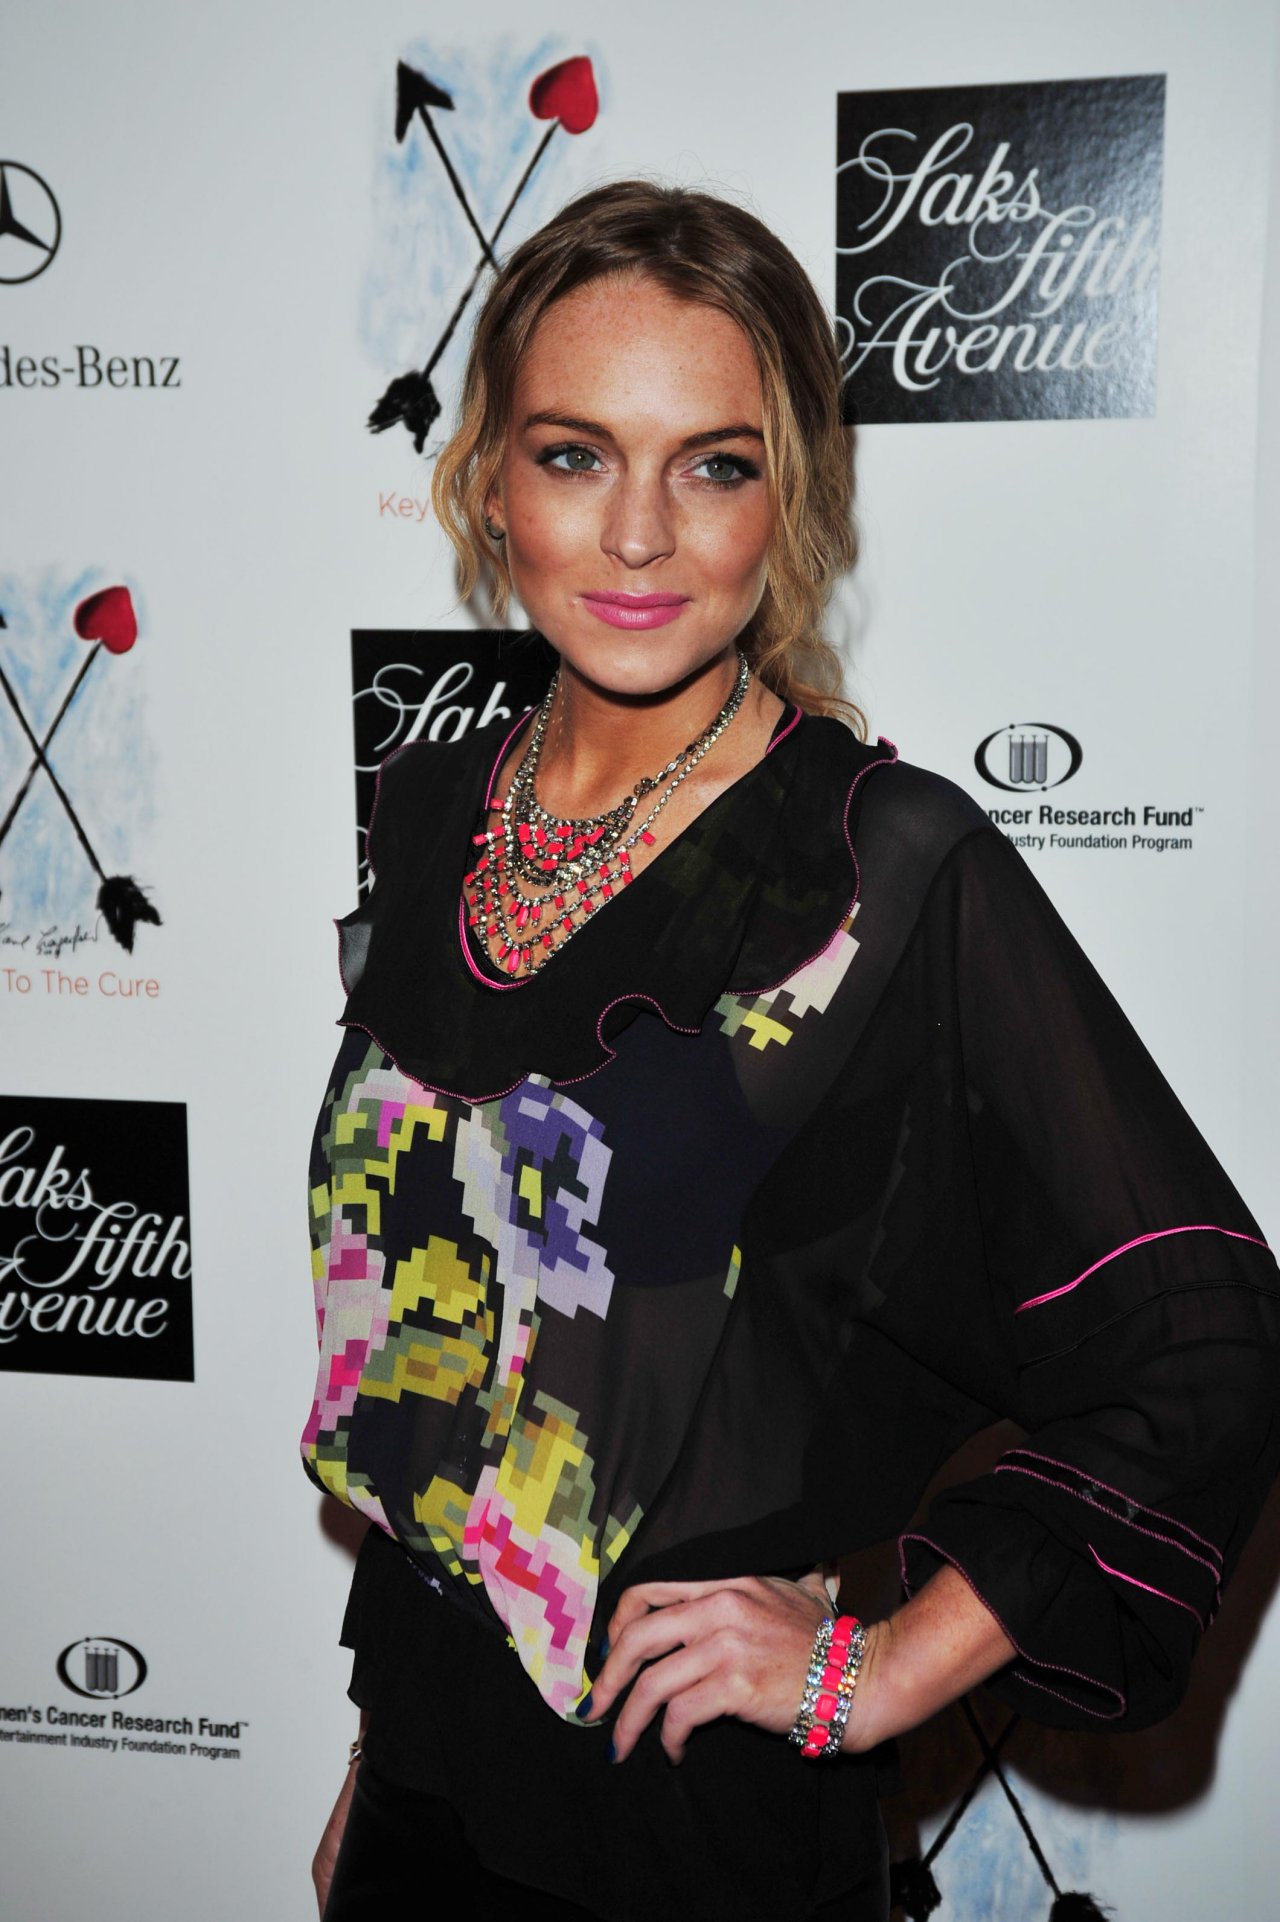 Lindsay Lohan leaked wallpapers